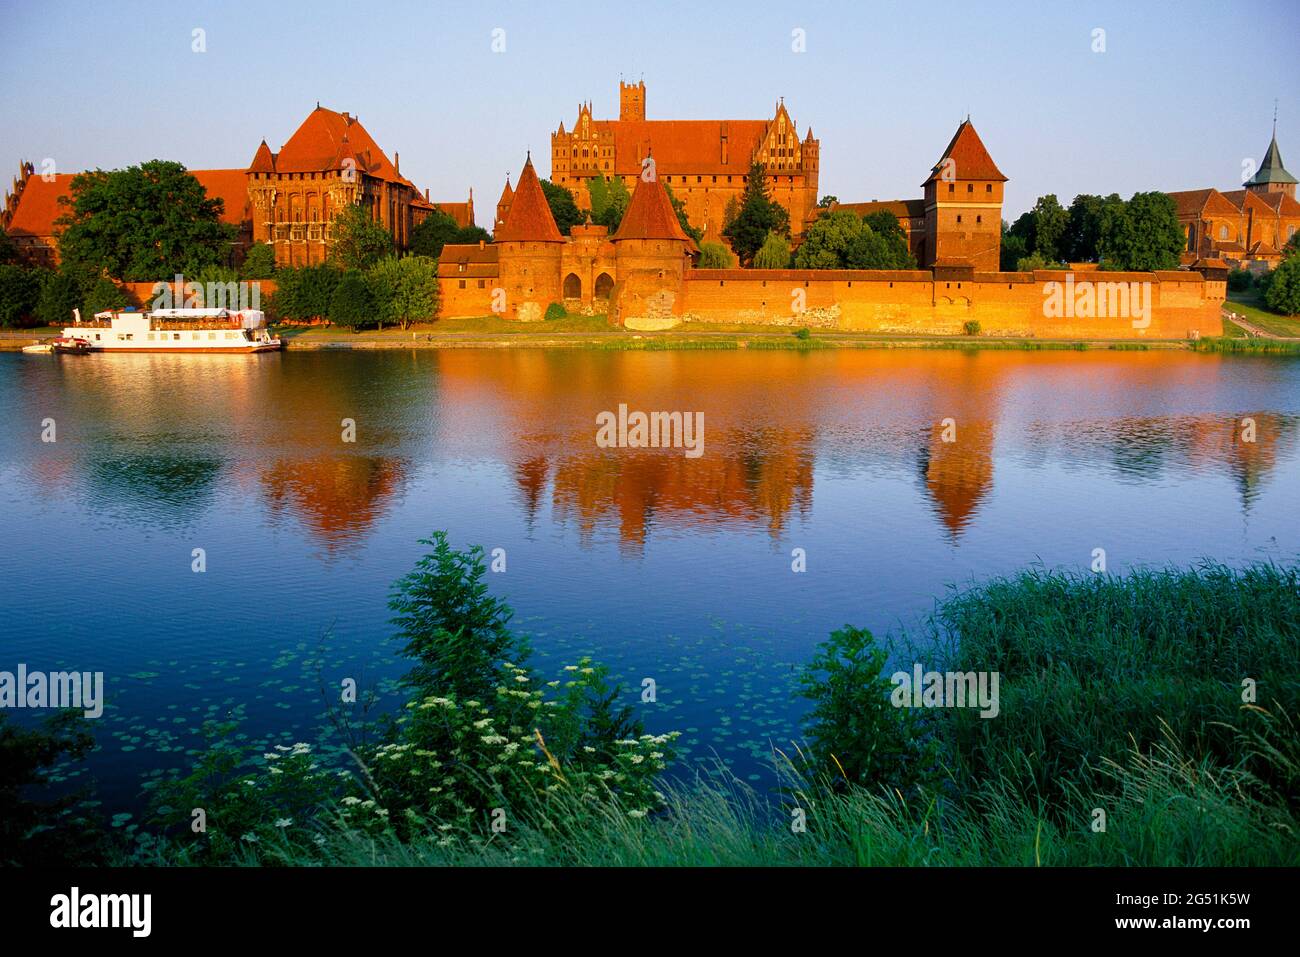 Nogat River and Castle of the Teutonic Order, Malbork, Pomeranian Voivodeship, Poland Stock Photo